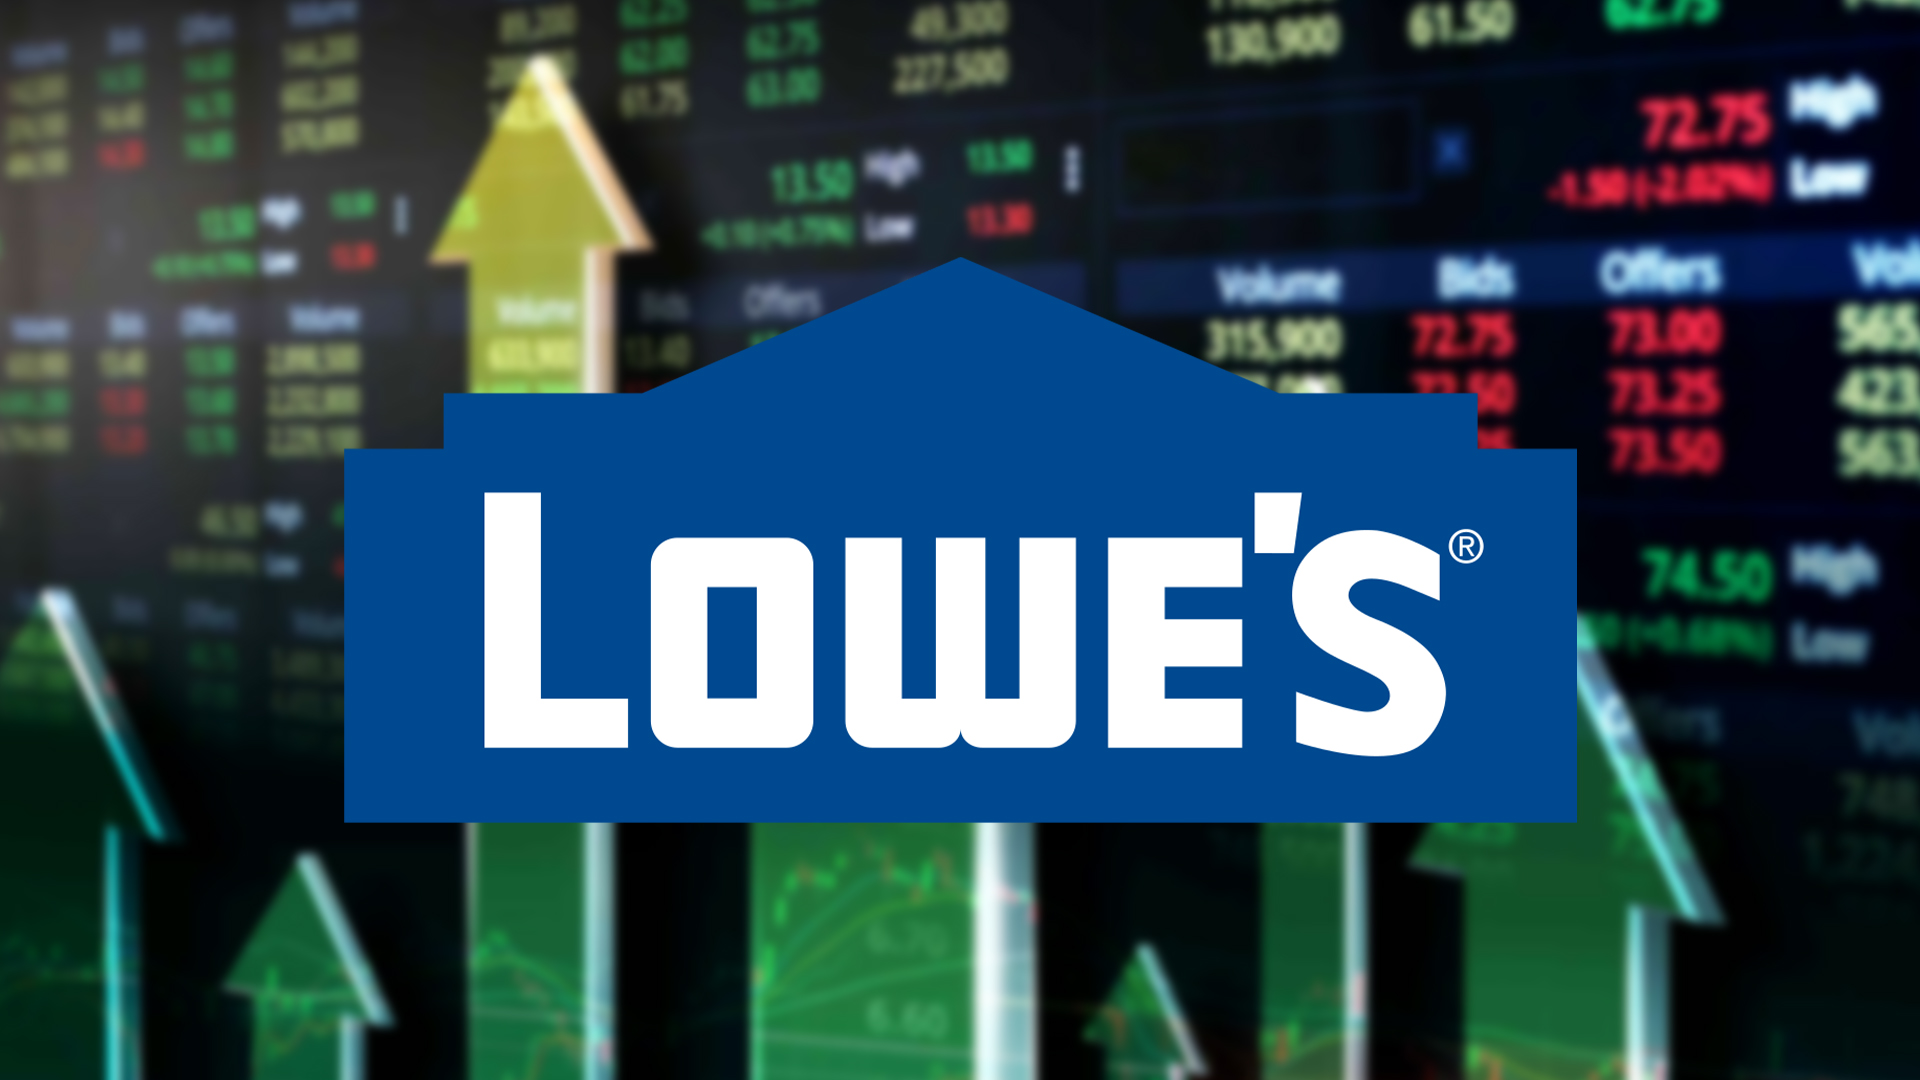 Lowe's Companies Inc. (LOW) Analysis and Prediction